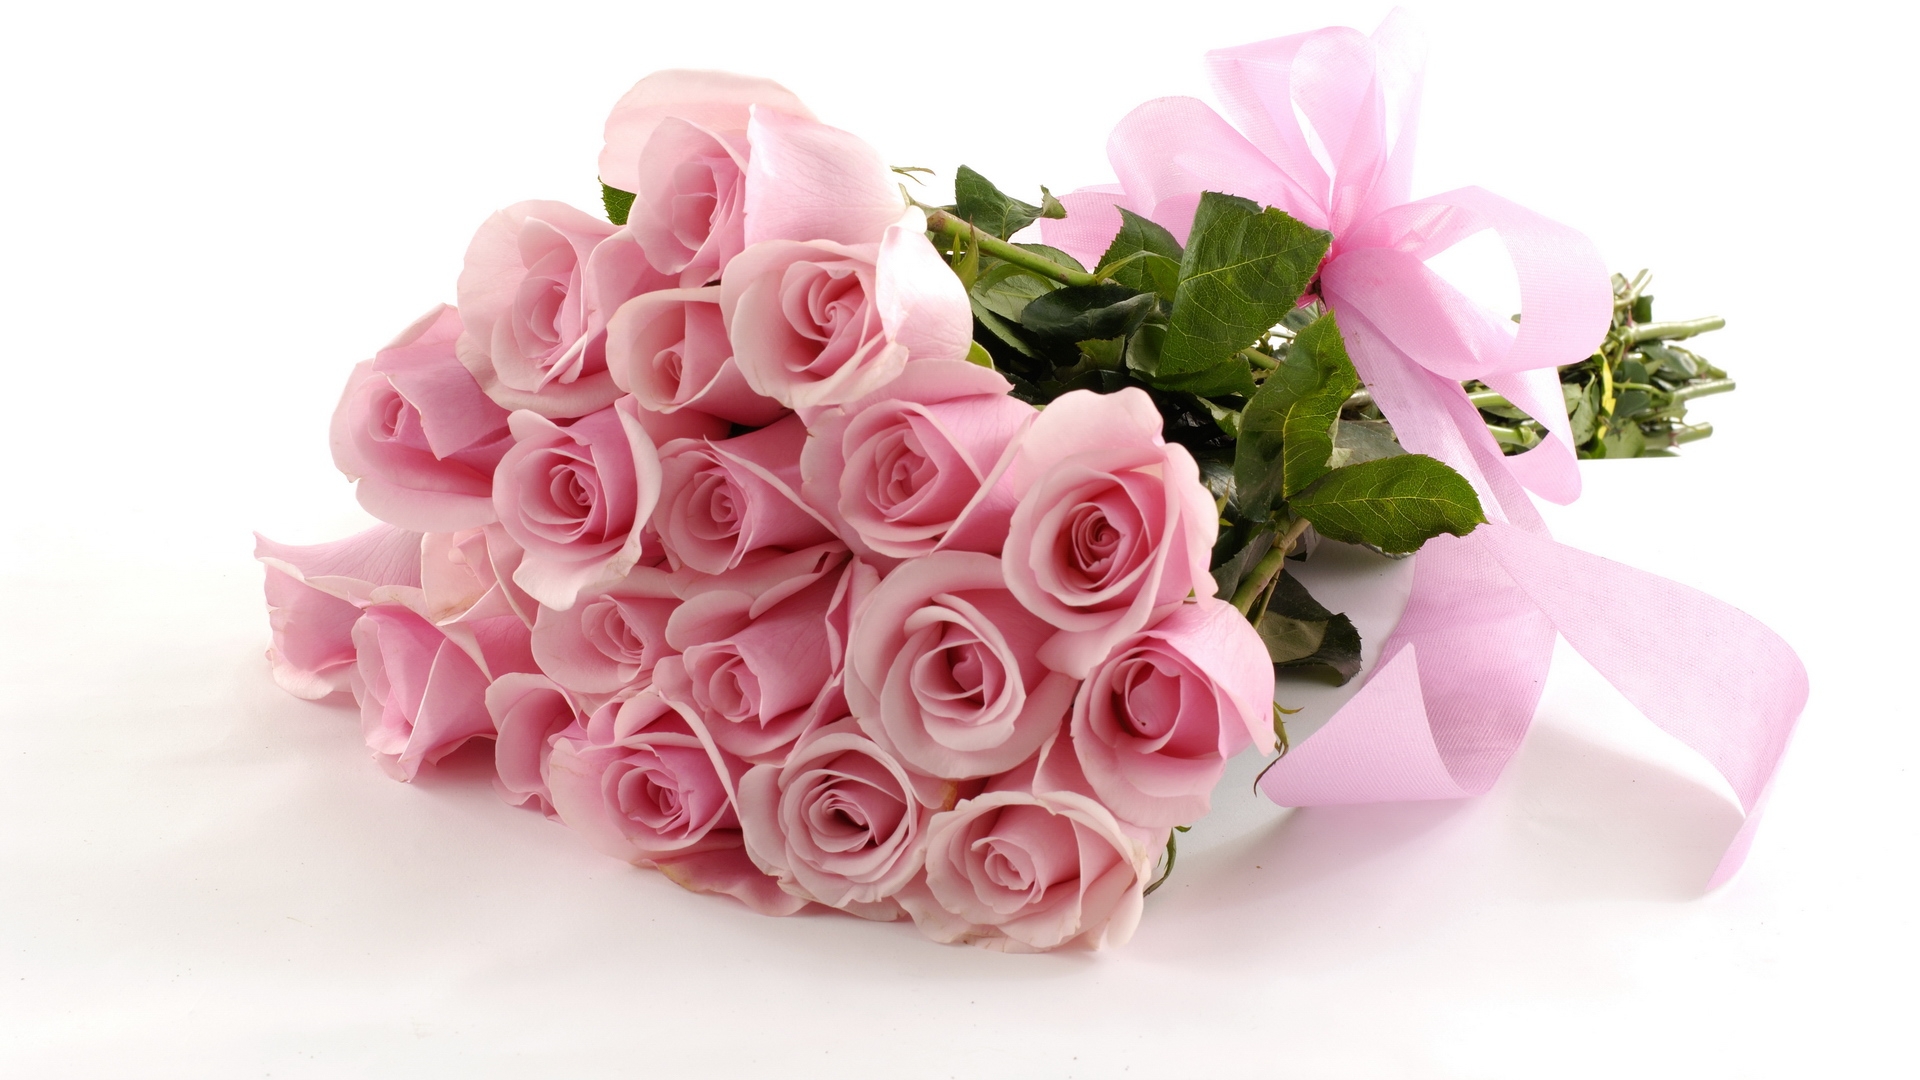 Саяногорск Инфо - holidays___international_womens_day_beautiful_pink_bouquet_as_a_gift_on_march_8_057093_.jpg, Скачано: 1102